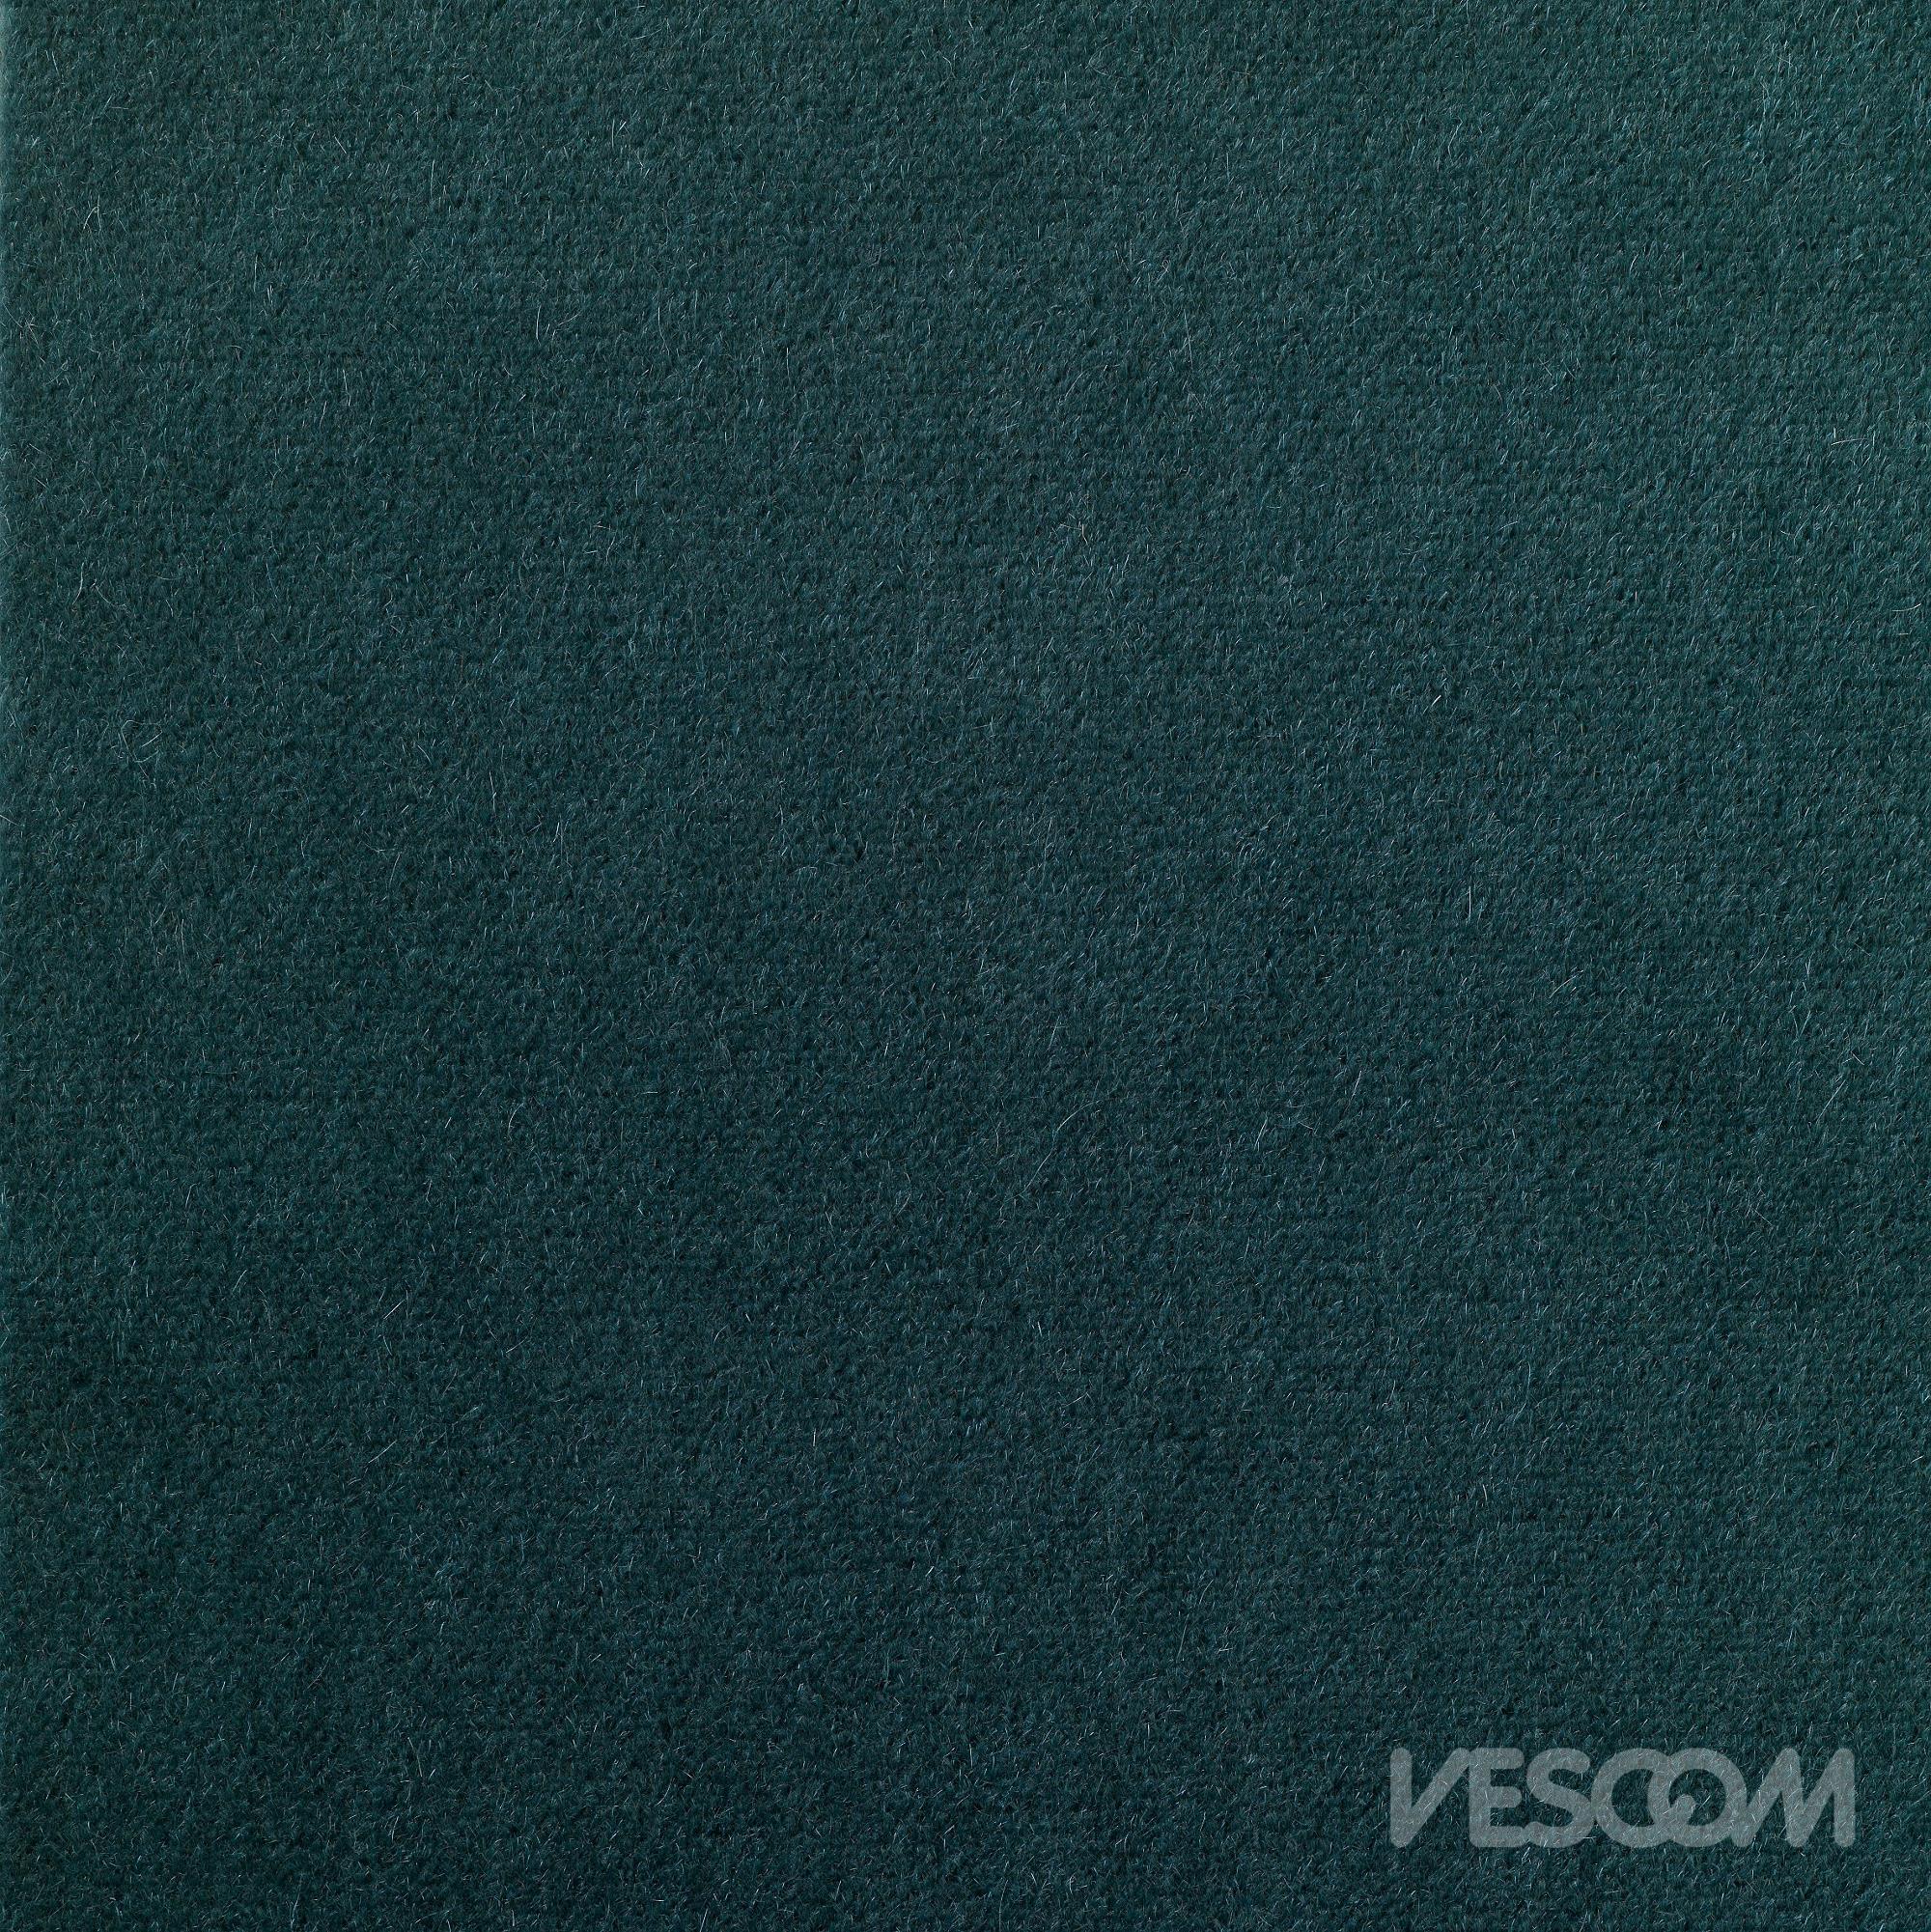 Vescom Ariana Upholstery Fabric 7061.06